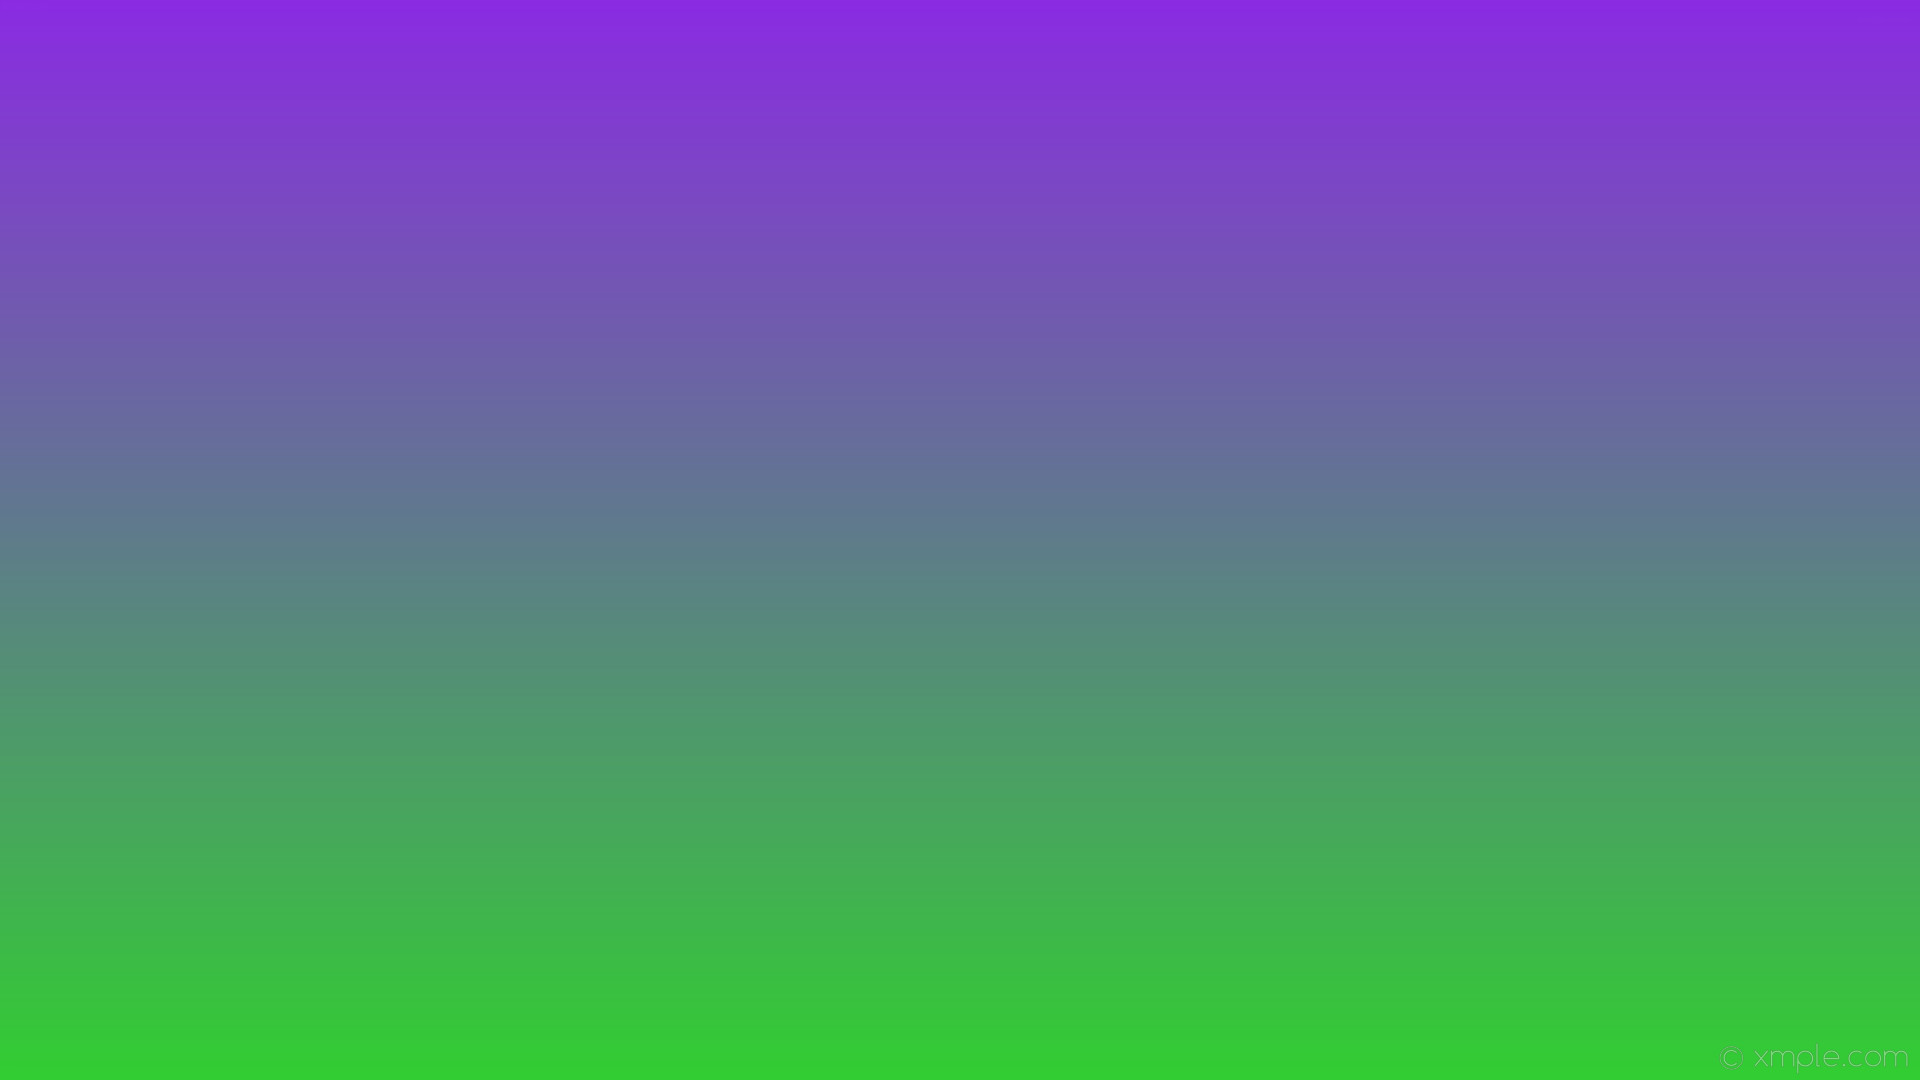 1920x1080 wallpaper gradient linear green purple blue violet lime green #8a2be2  #32cd32 90Â°